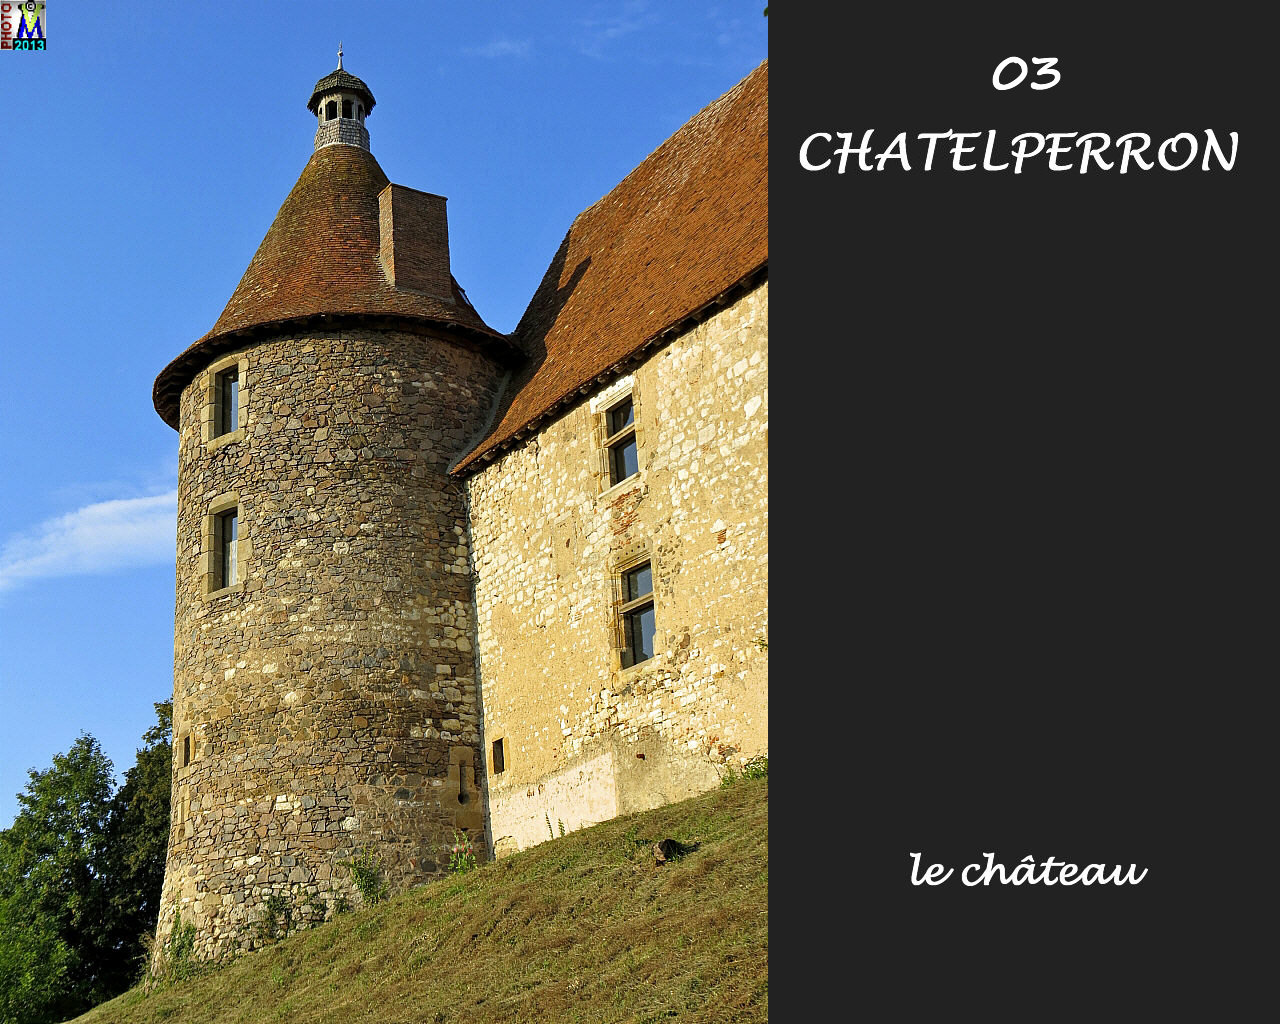 03CHATELPERRON_chateau_106.jpg